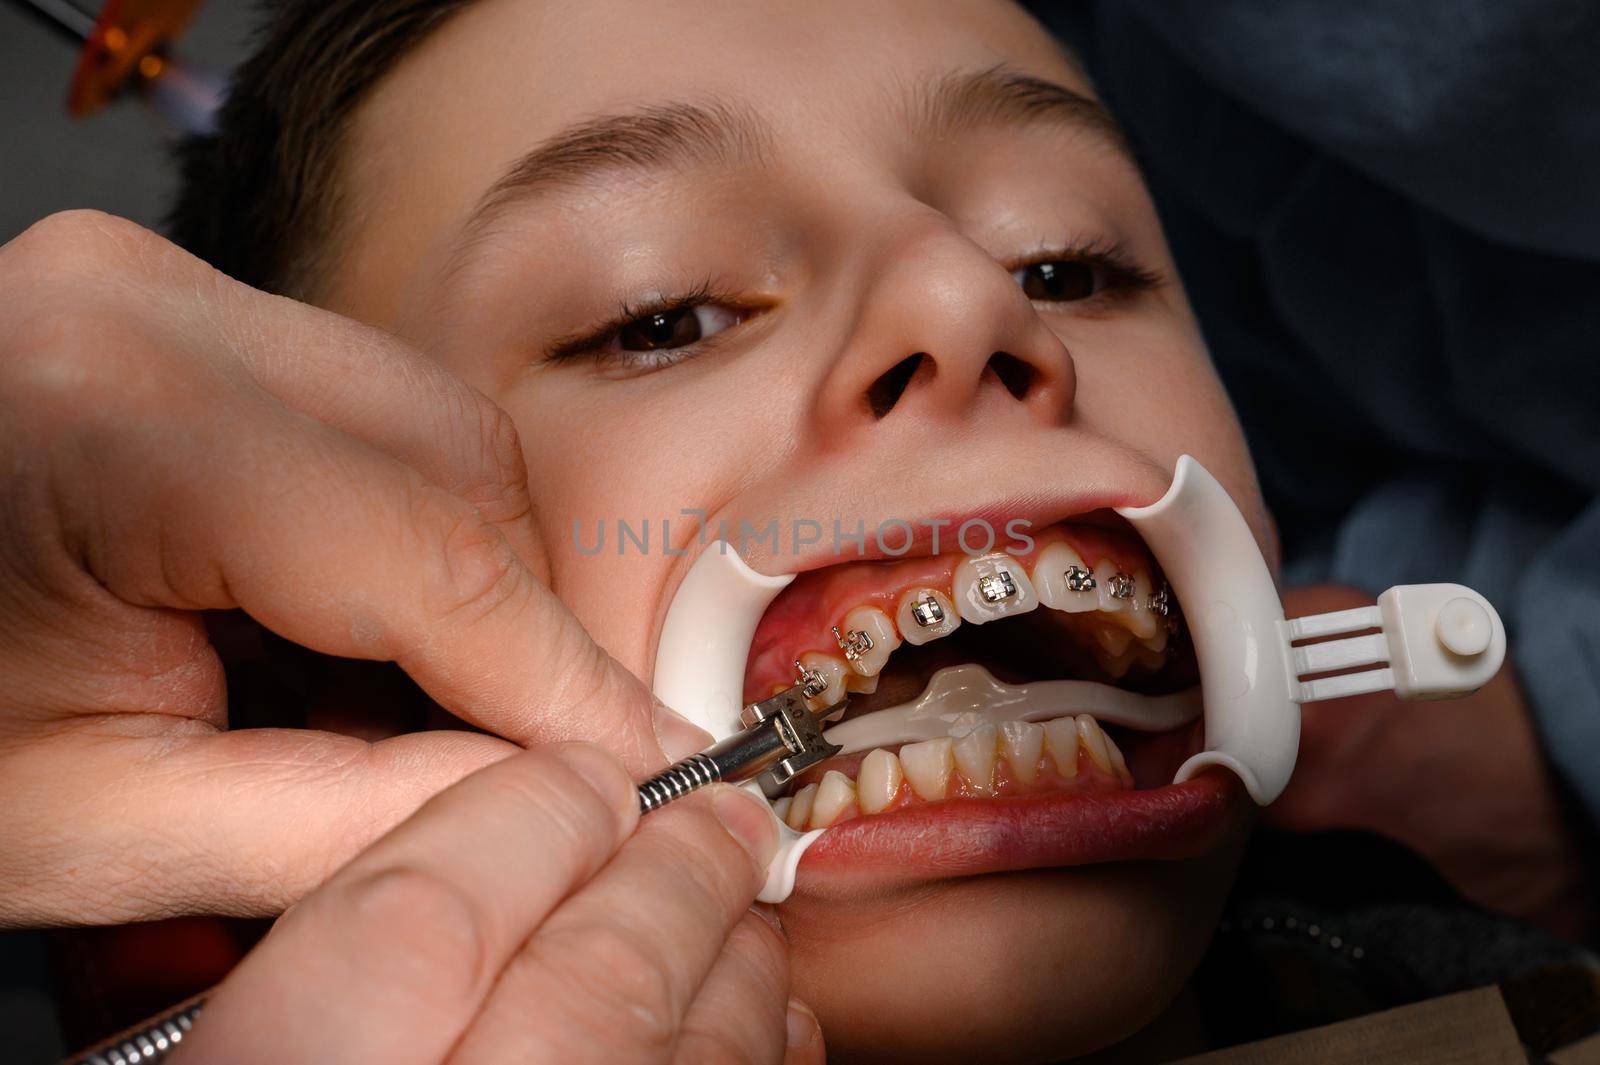 White retractor on lips and installation of metal braces on teen's upper teeth. by Niko_Cingaryuk